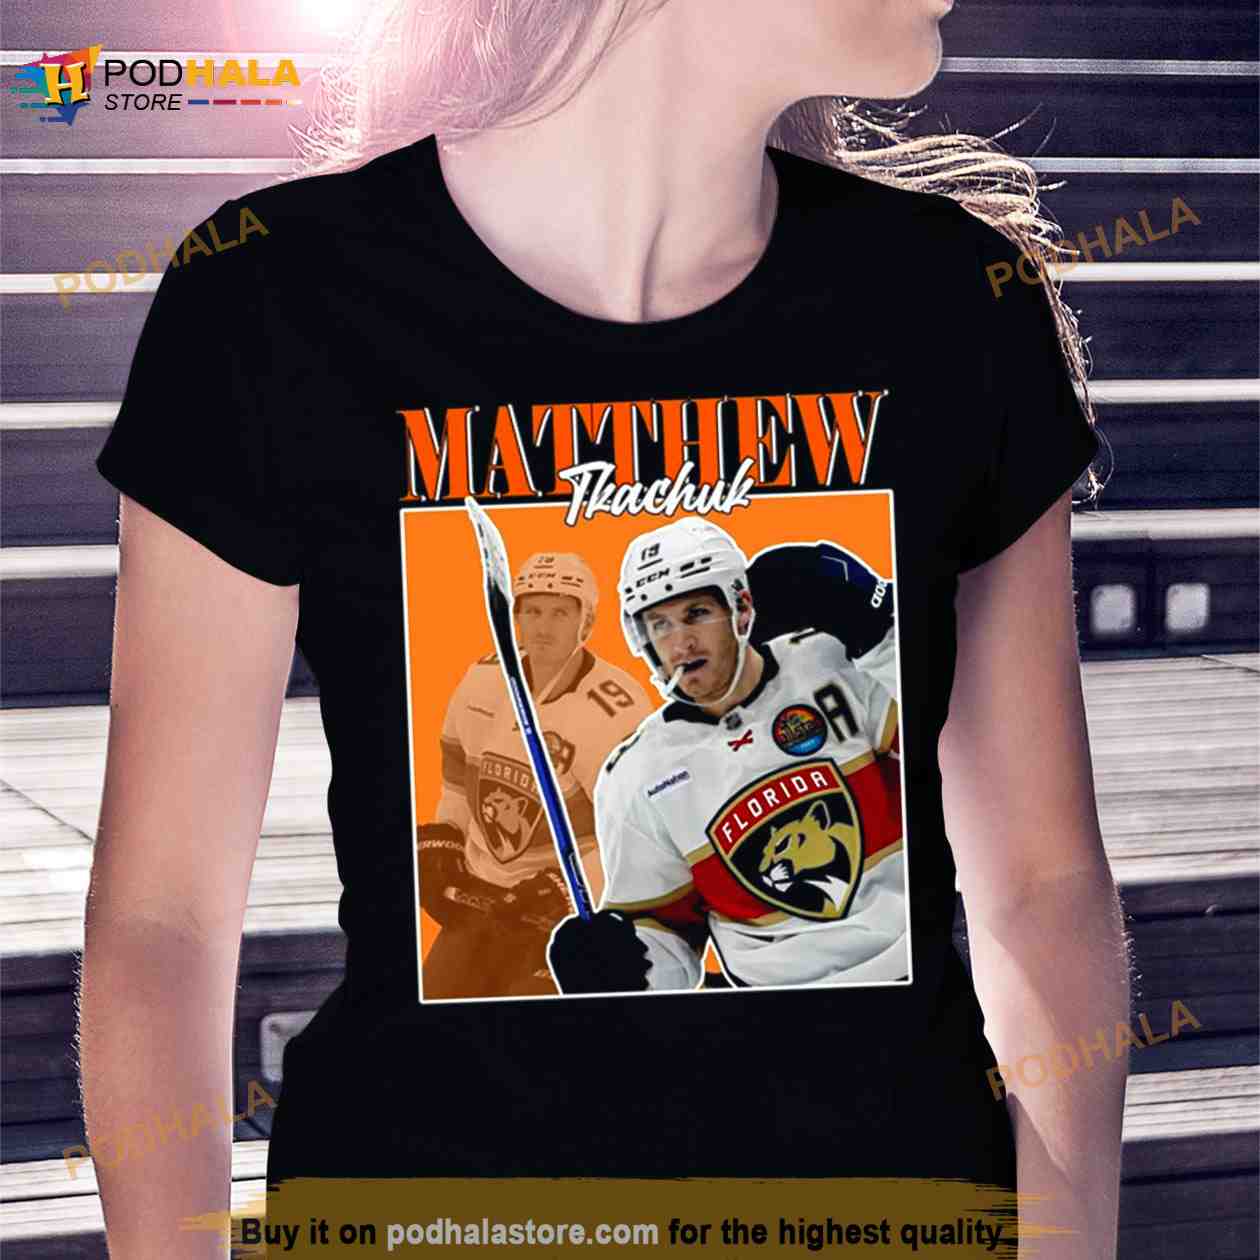 Matthew Tkachuk Jerseys, Matthew Tkachuk T-Shirts & Gear